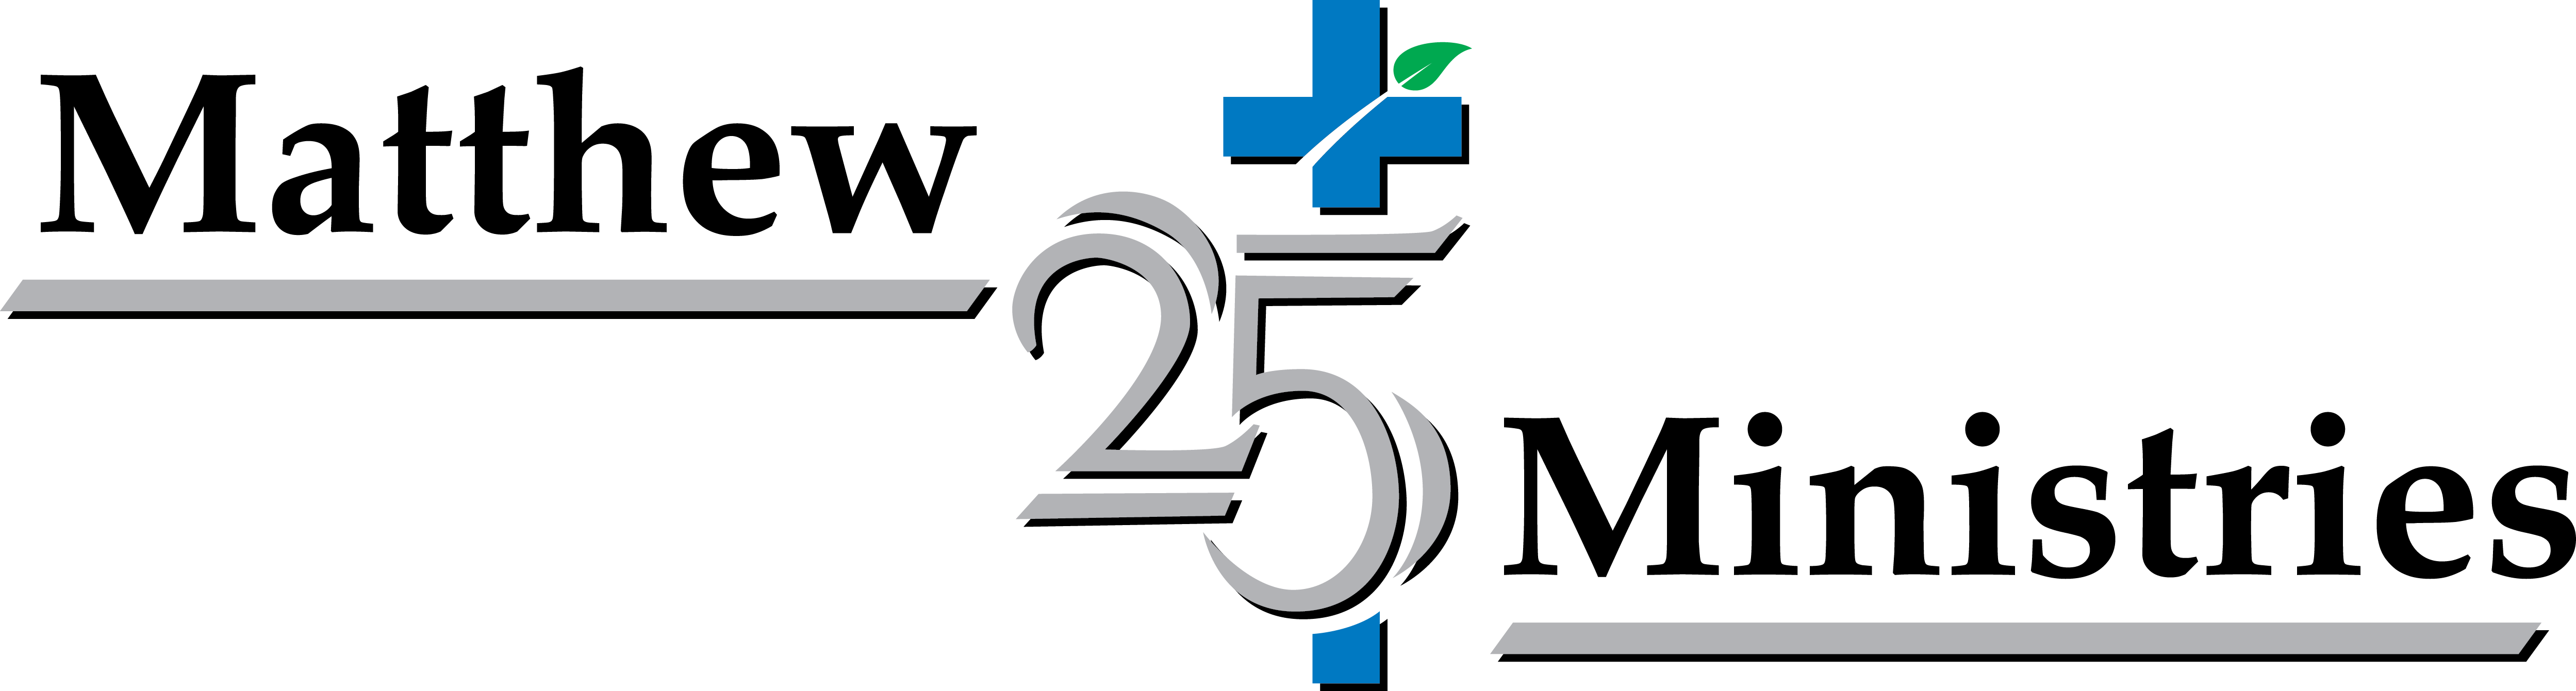 Matthew 25 Ministries logo